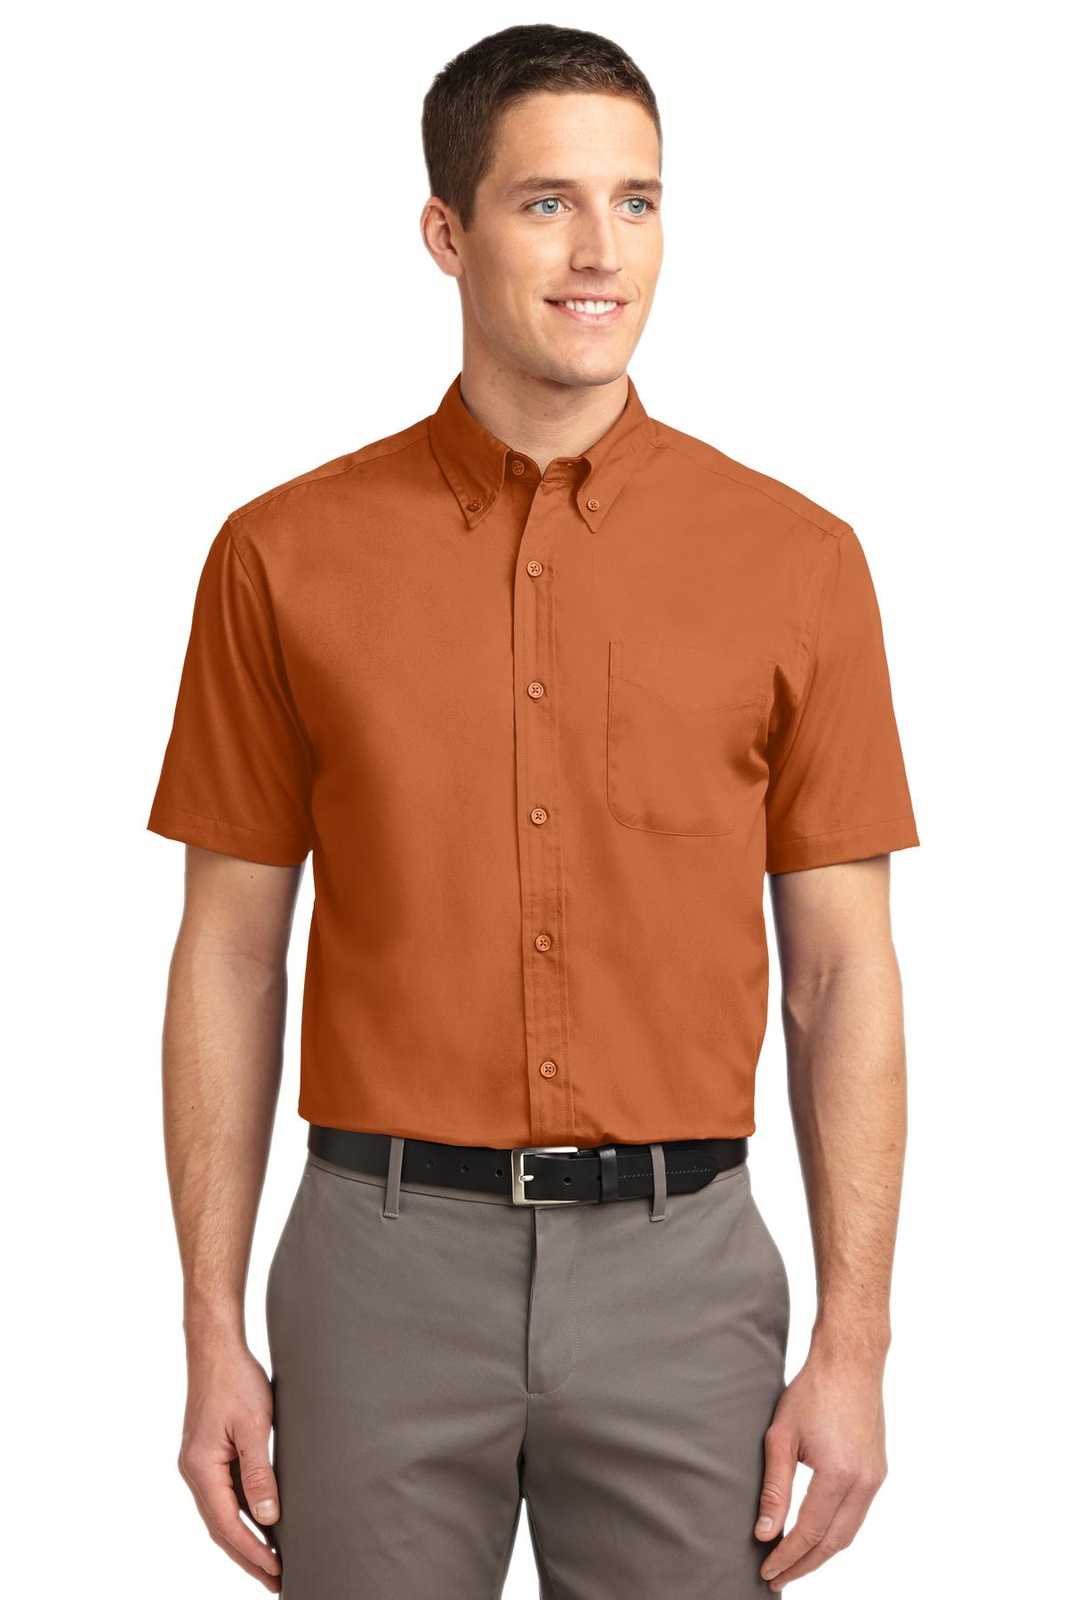 Port Authority S508 Short Sleeve Easy Care Shirt - Texas Orange Light Stone - HIT a Double - 1